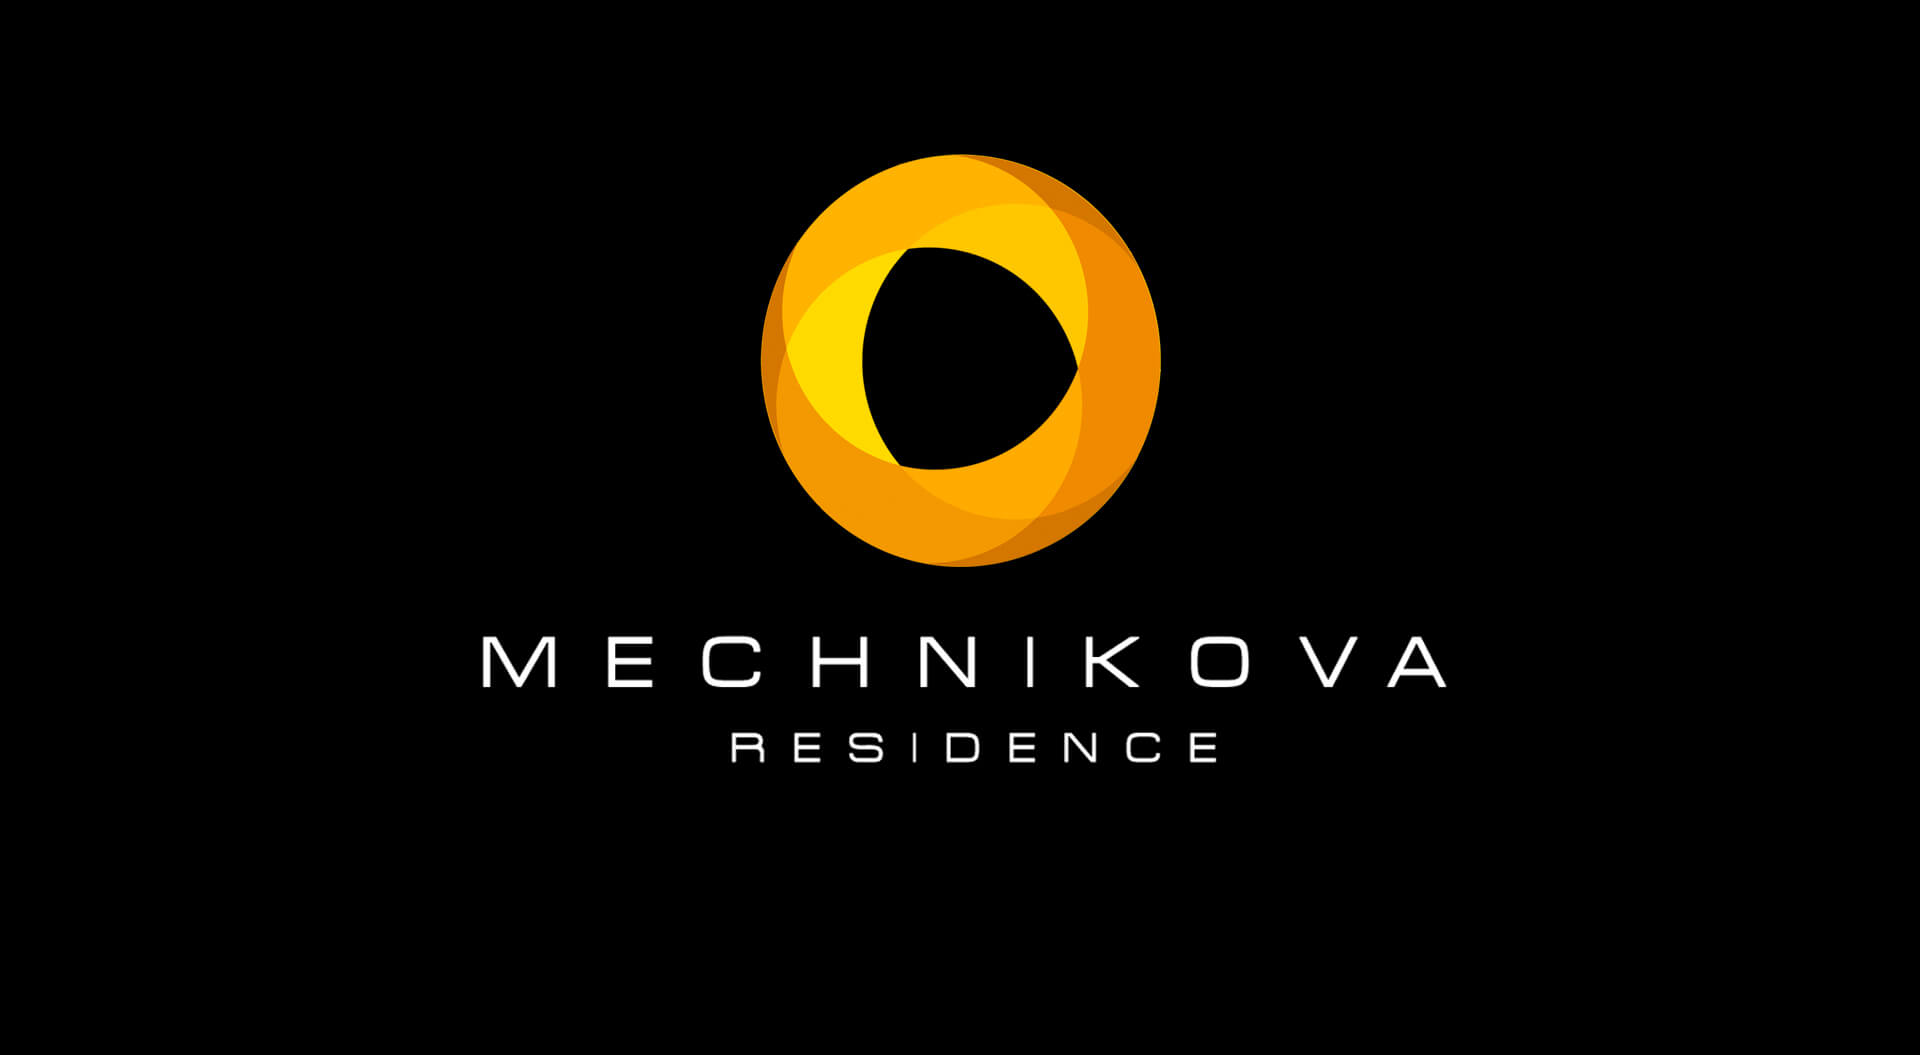 Residential property brand identity, Mechnikova, design for Continuum Ukraine